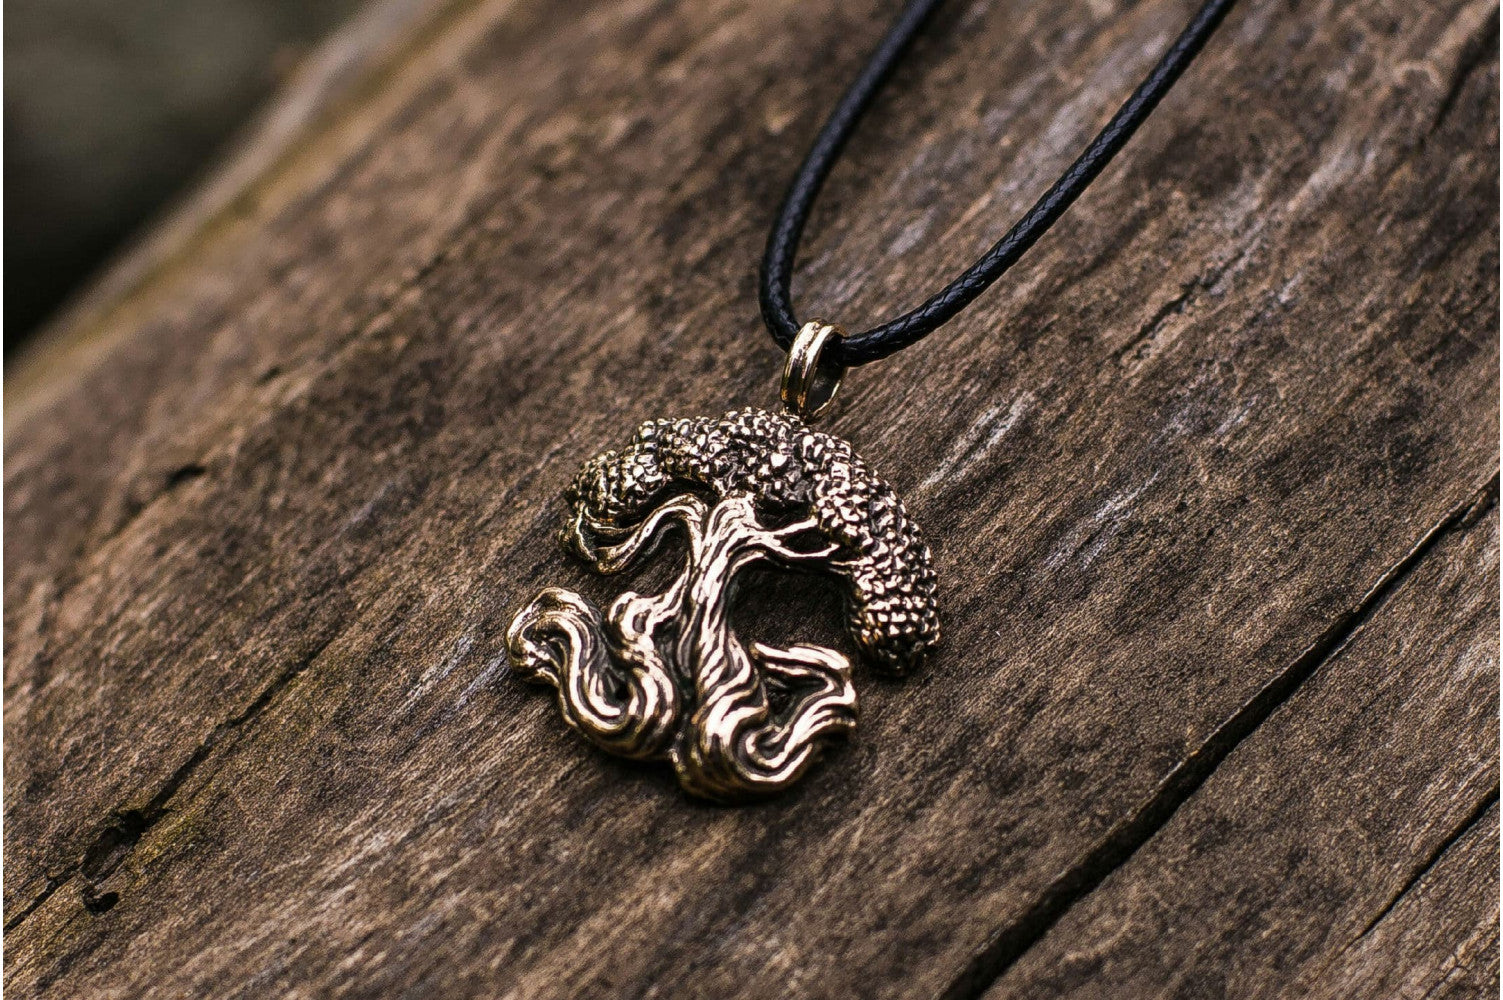 Yggdrasil World Tree Bronze Pendant Norse Jewelry